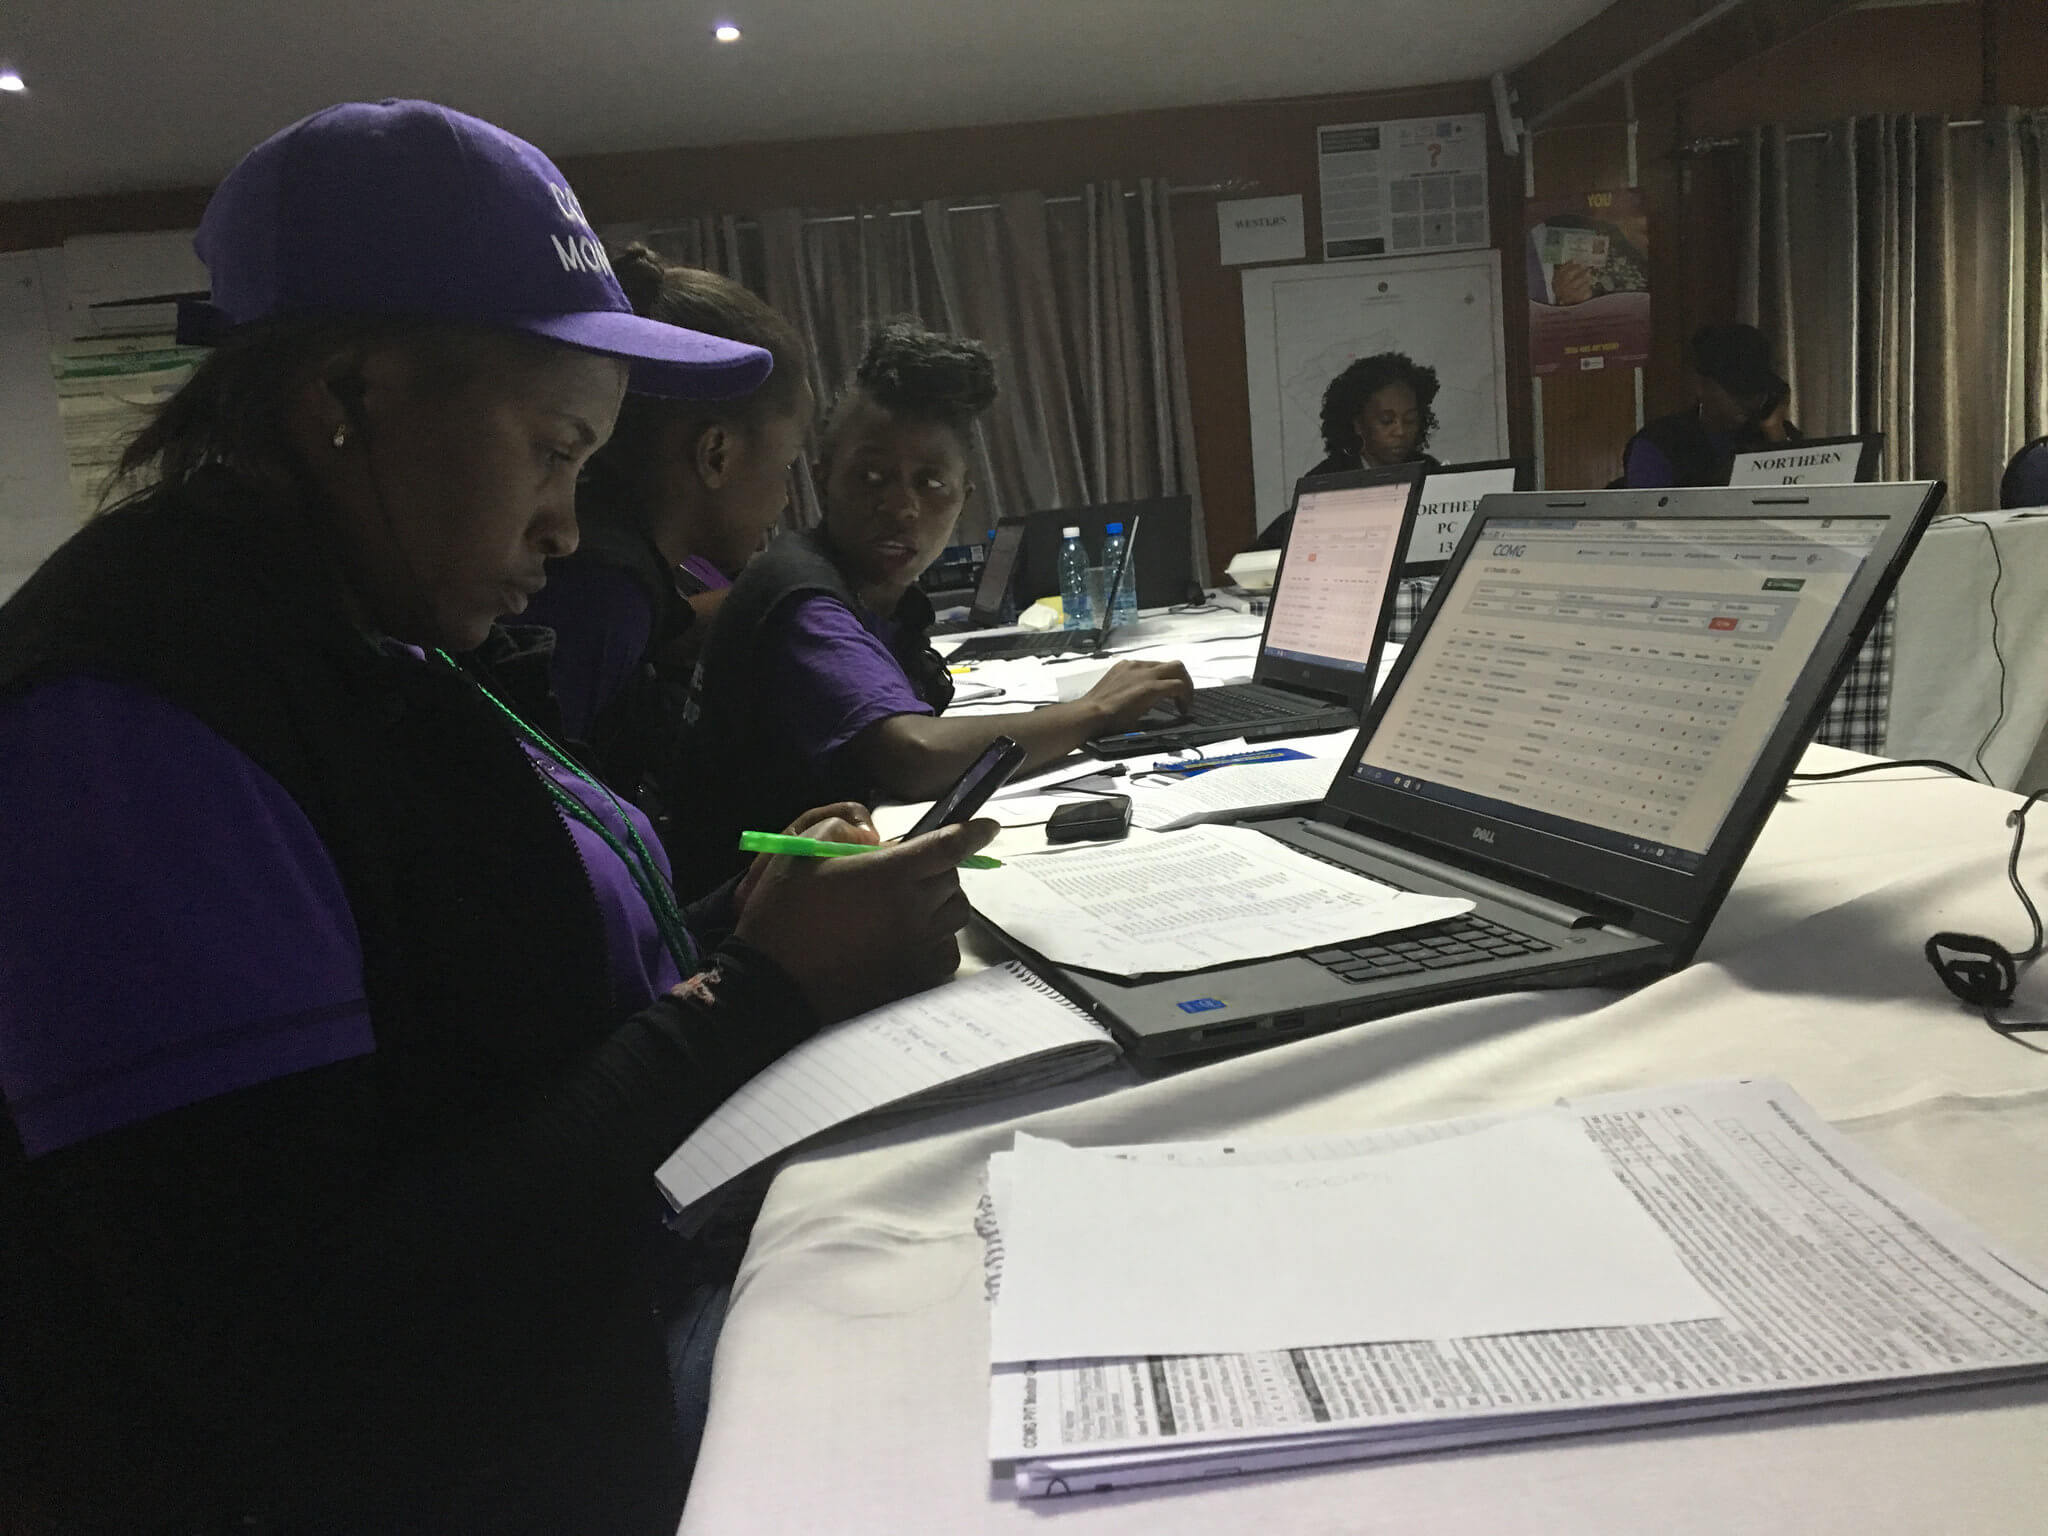 Zambian data clerks compiling election monitoring reports